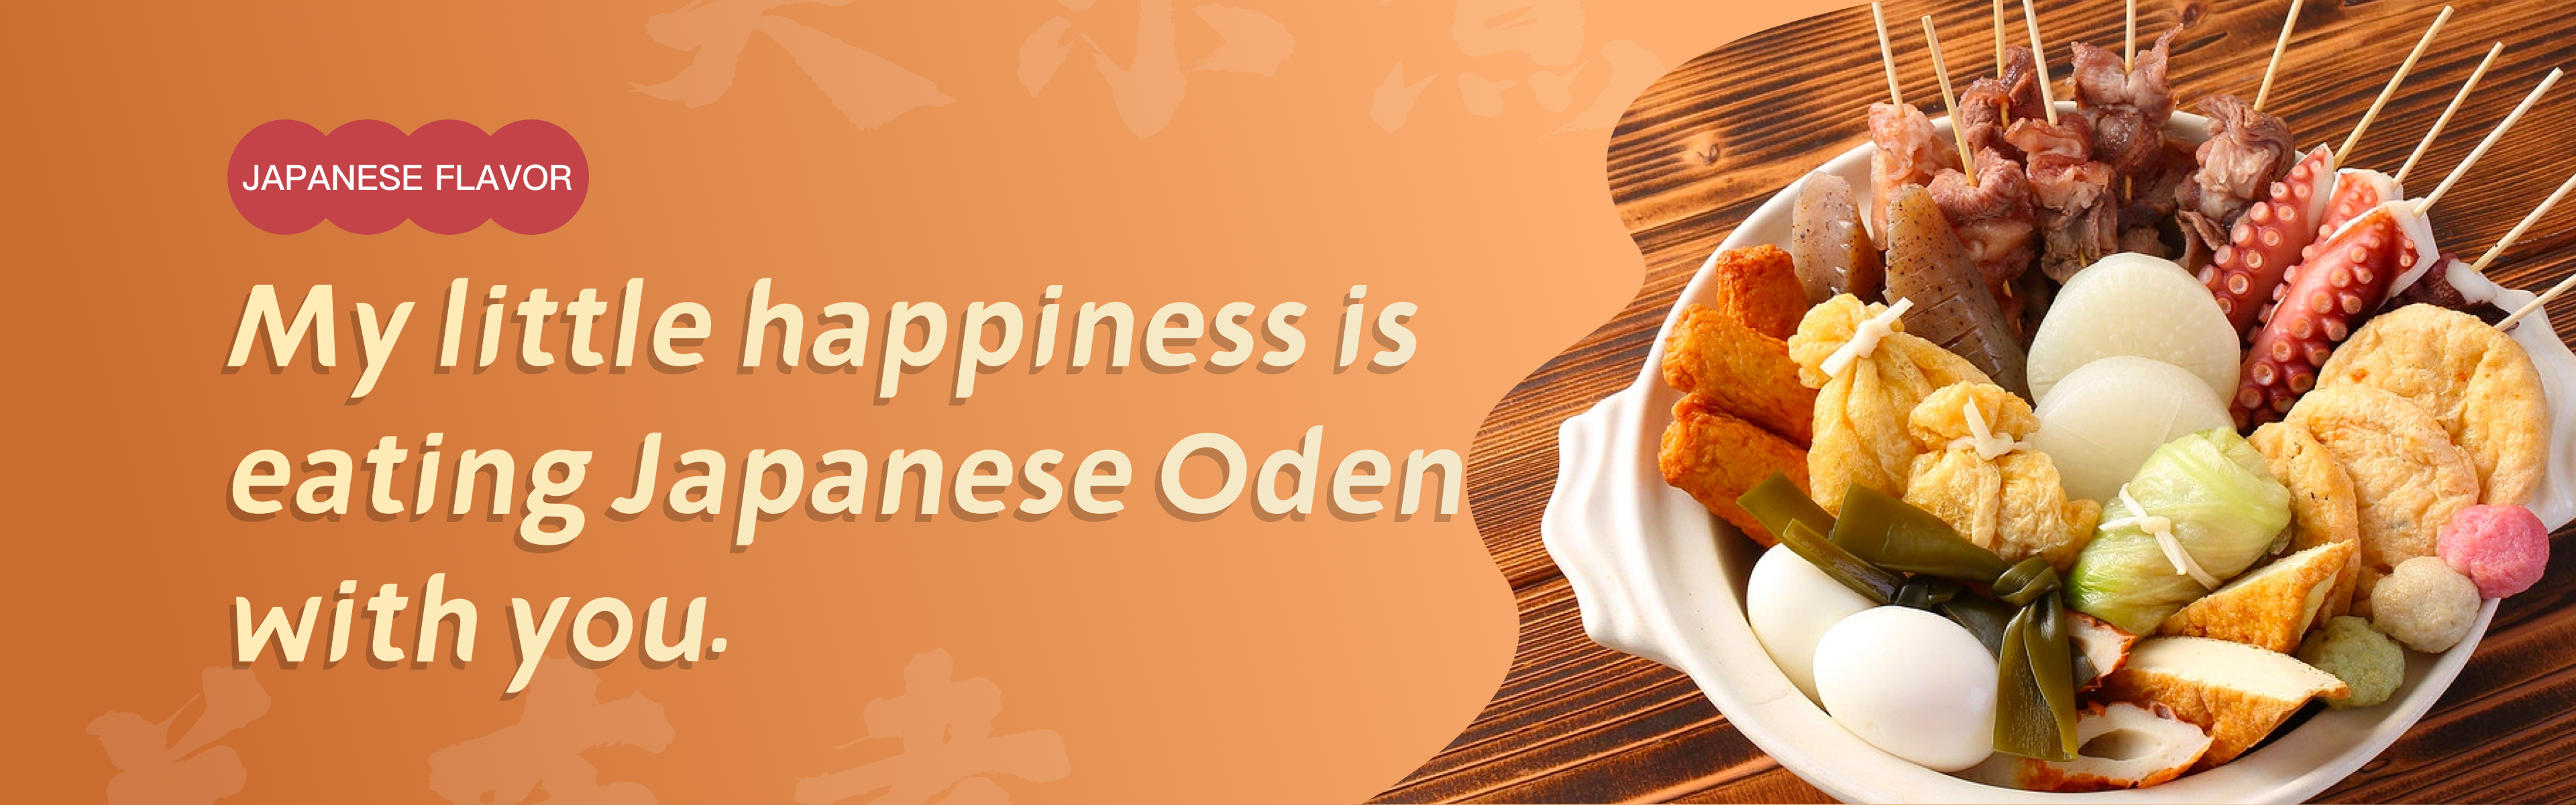 Japanese Oden